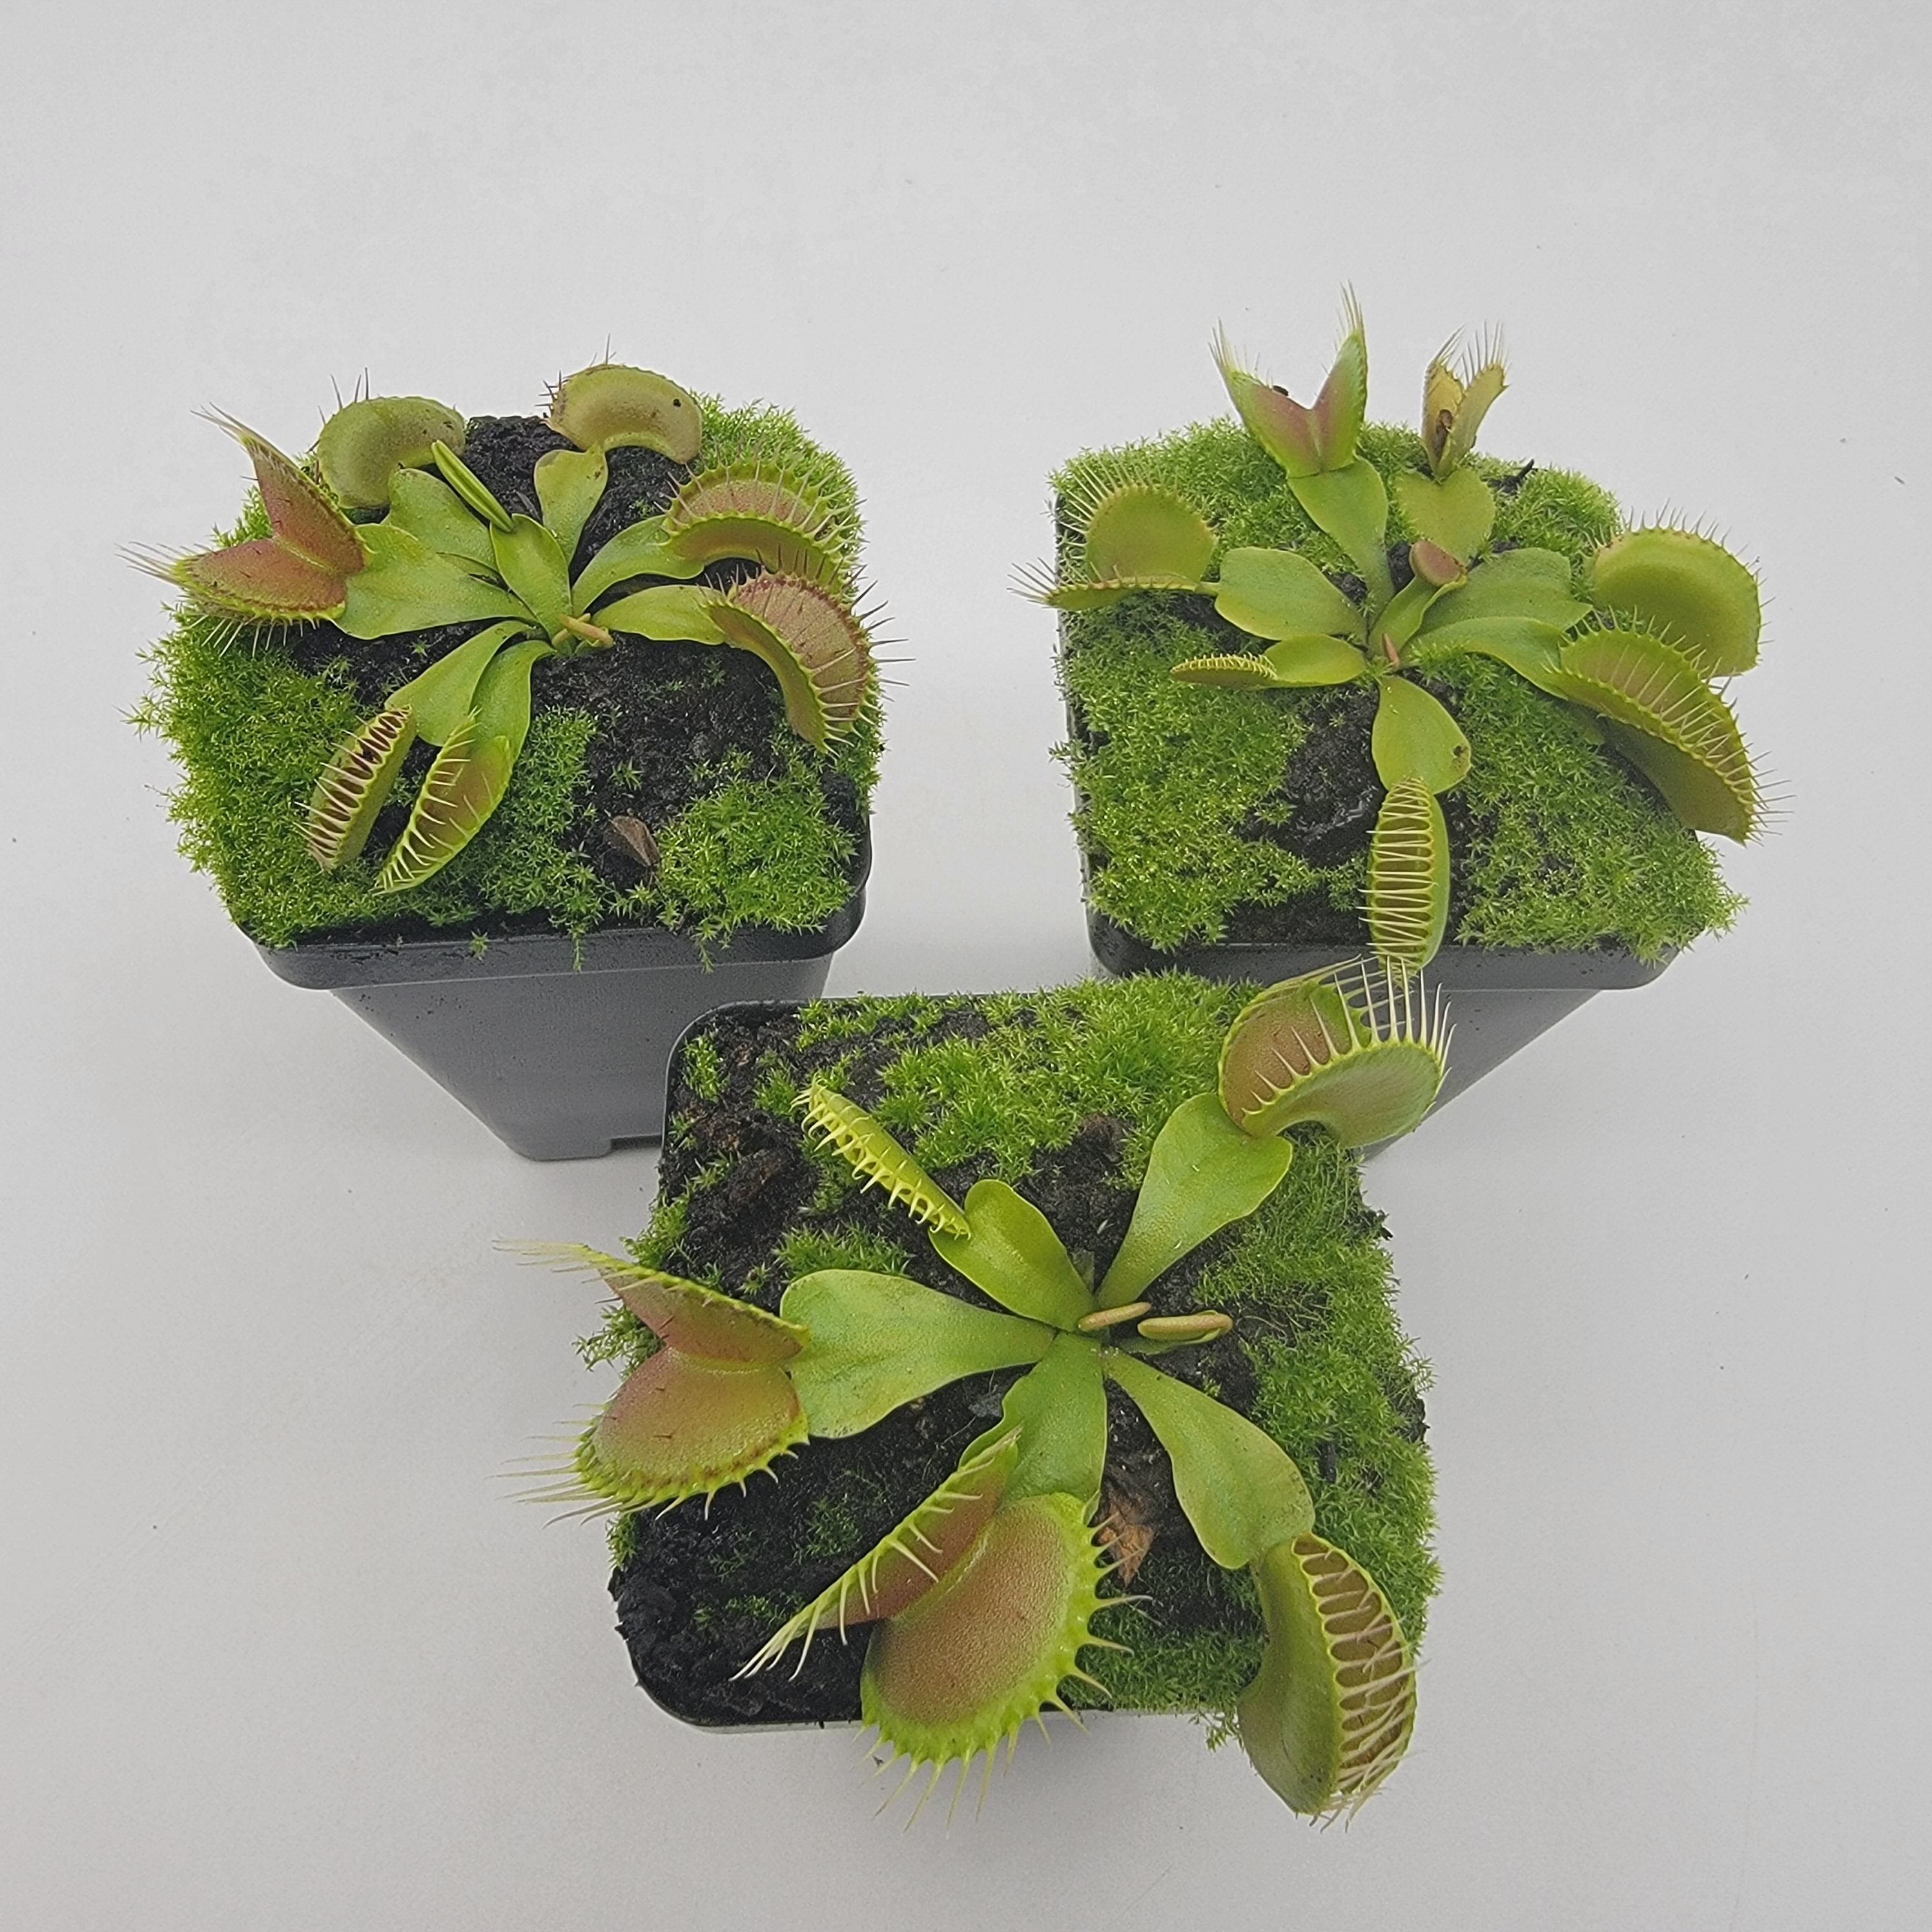 Venus flytrap (Dionaea muscipula) "Dingley Giant" - Rainbow Carnivorous Plants LLC